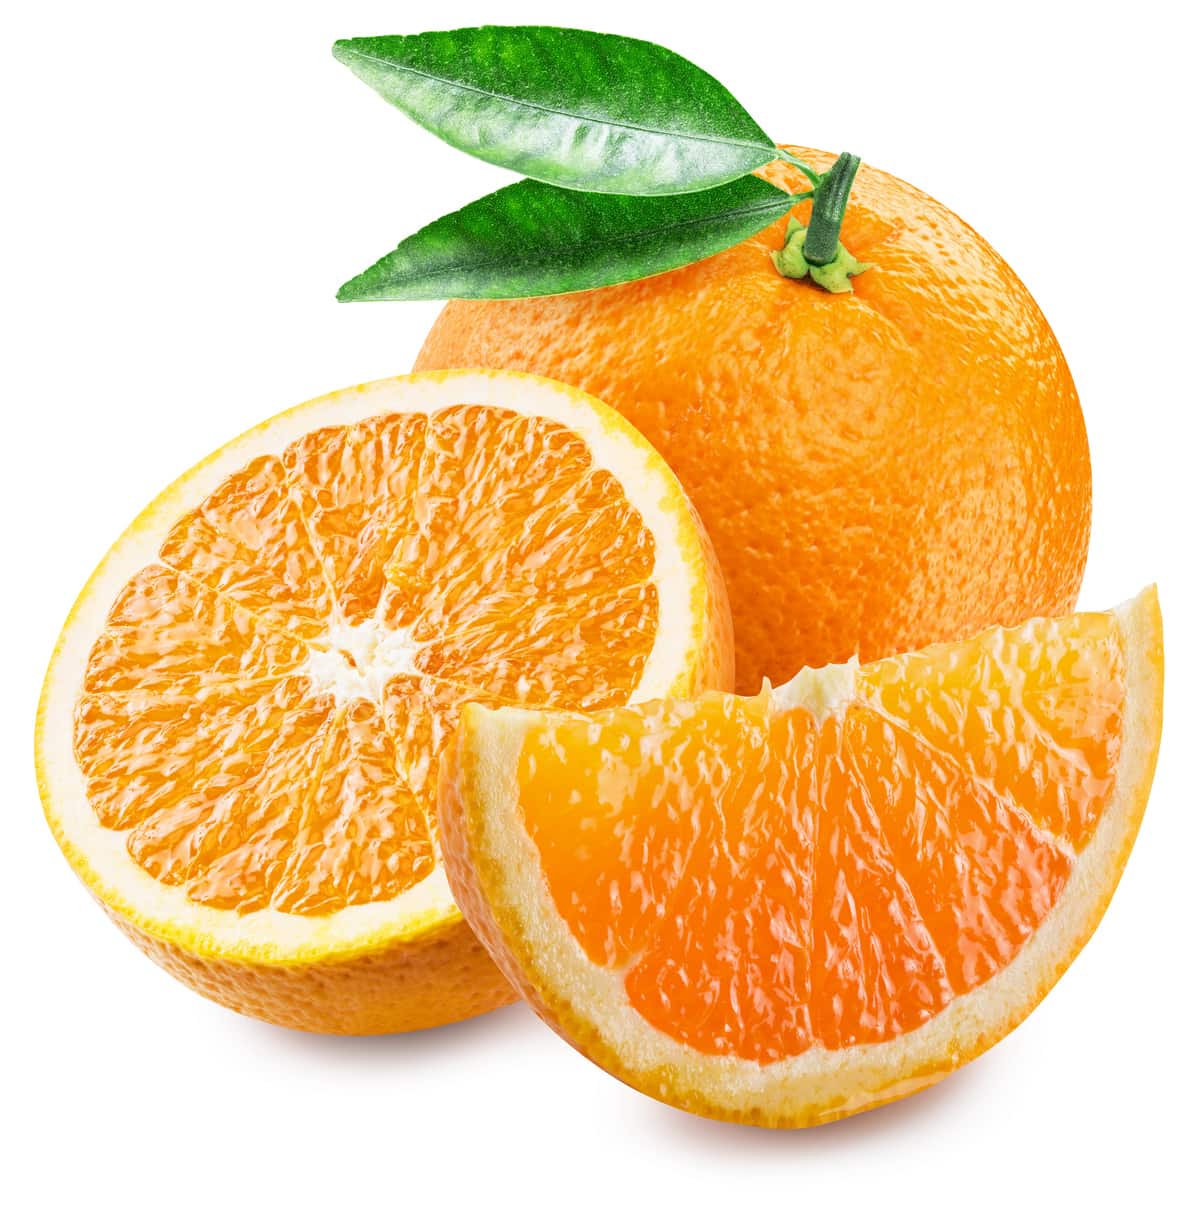 In season July Oranges